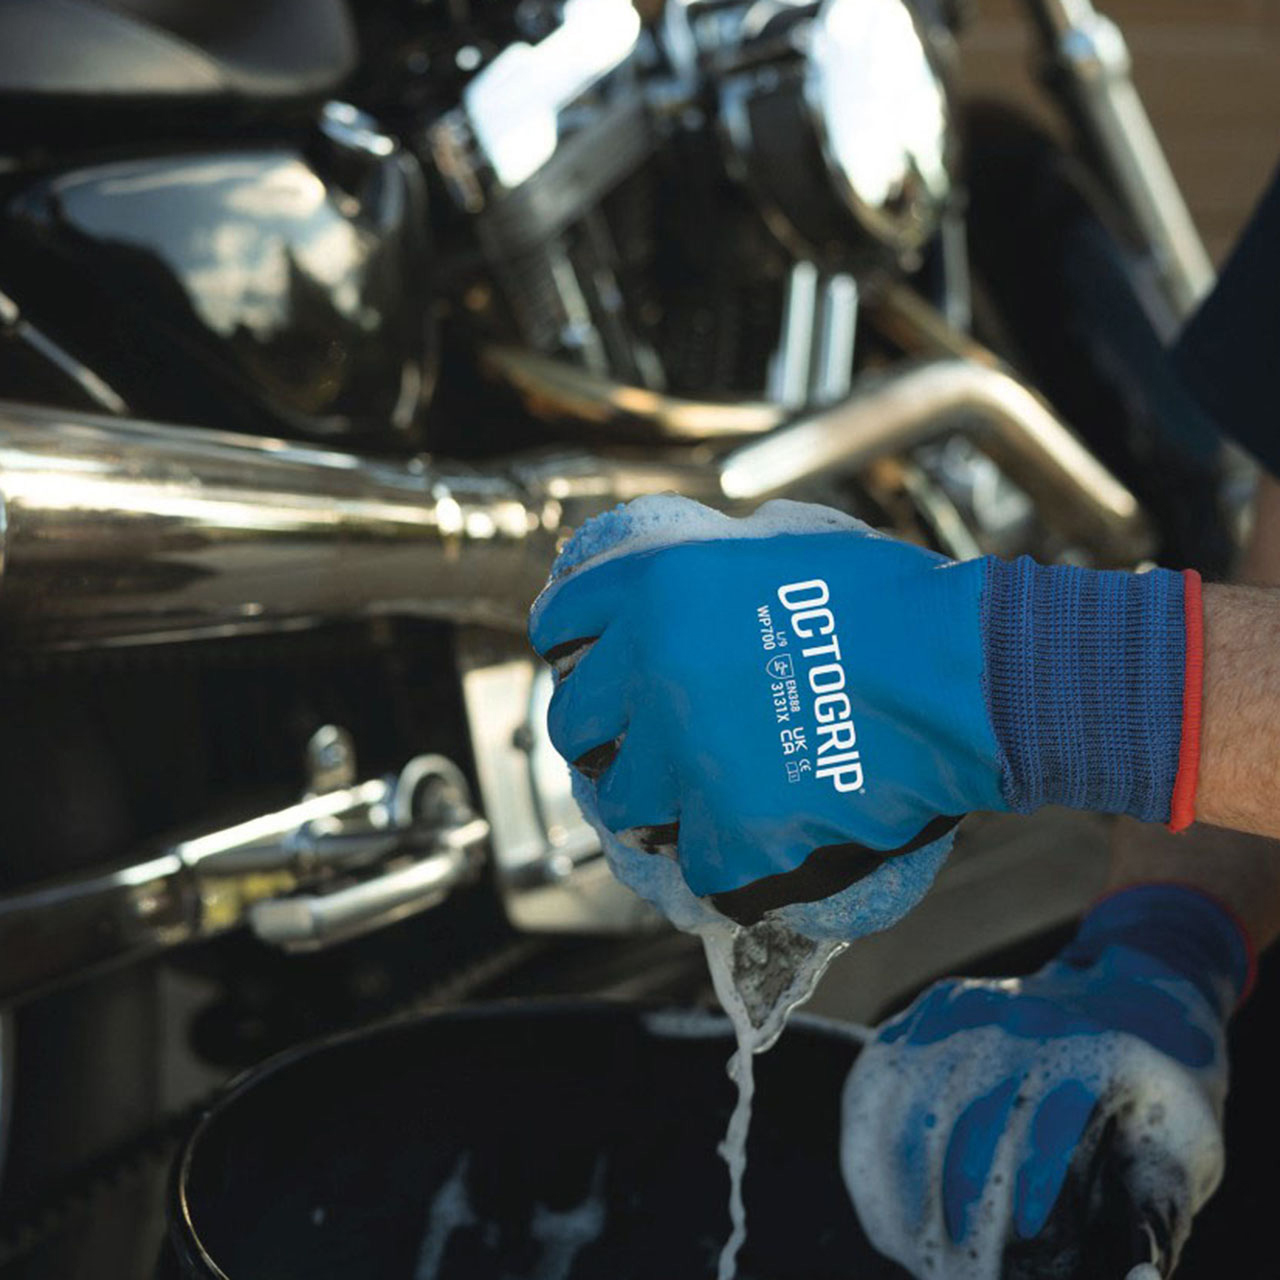 OctoGrip? Waterproof Gloves